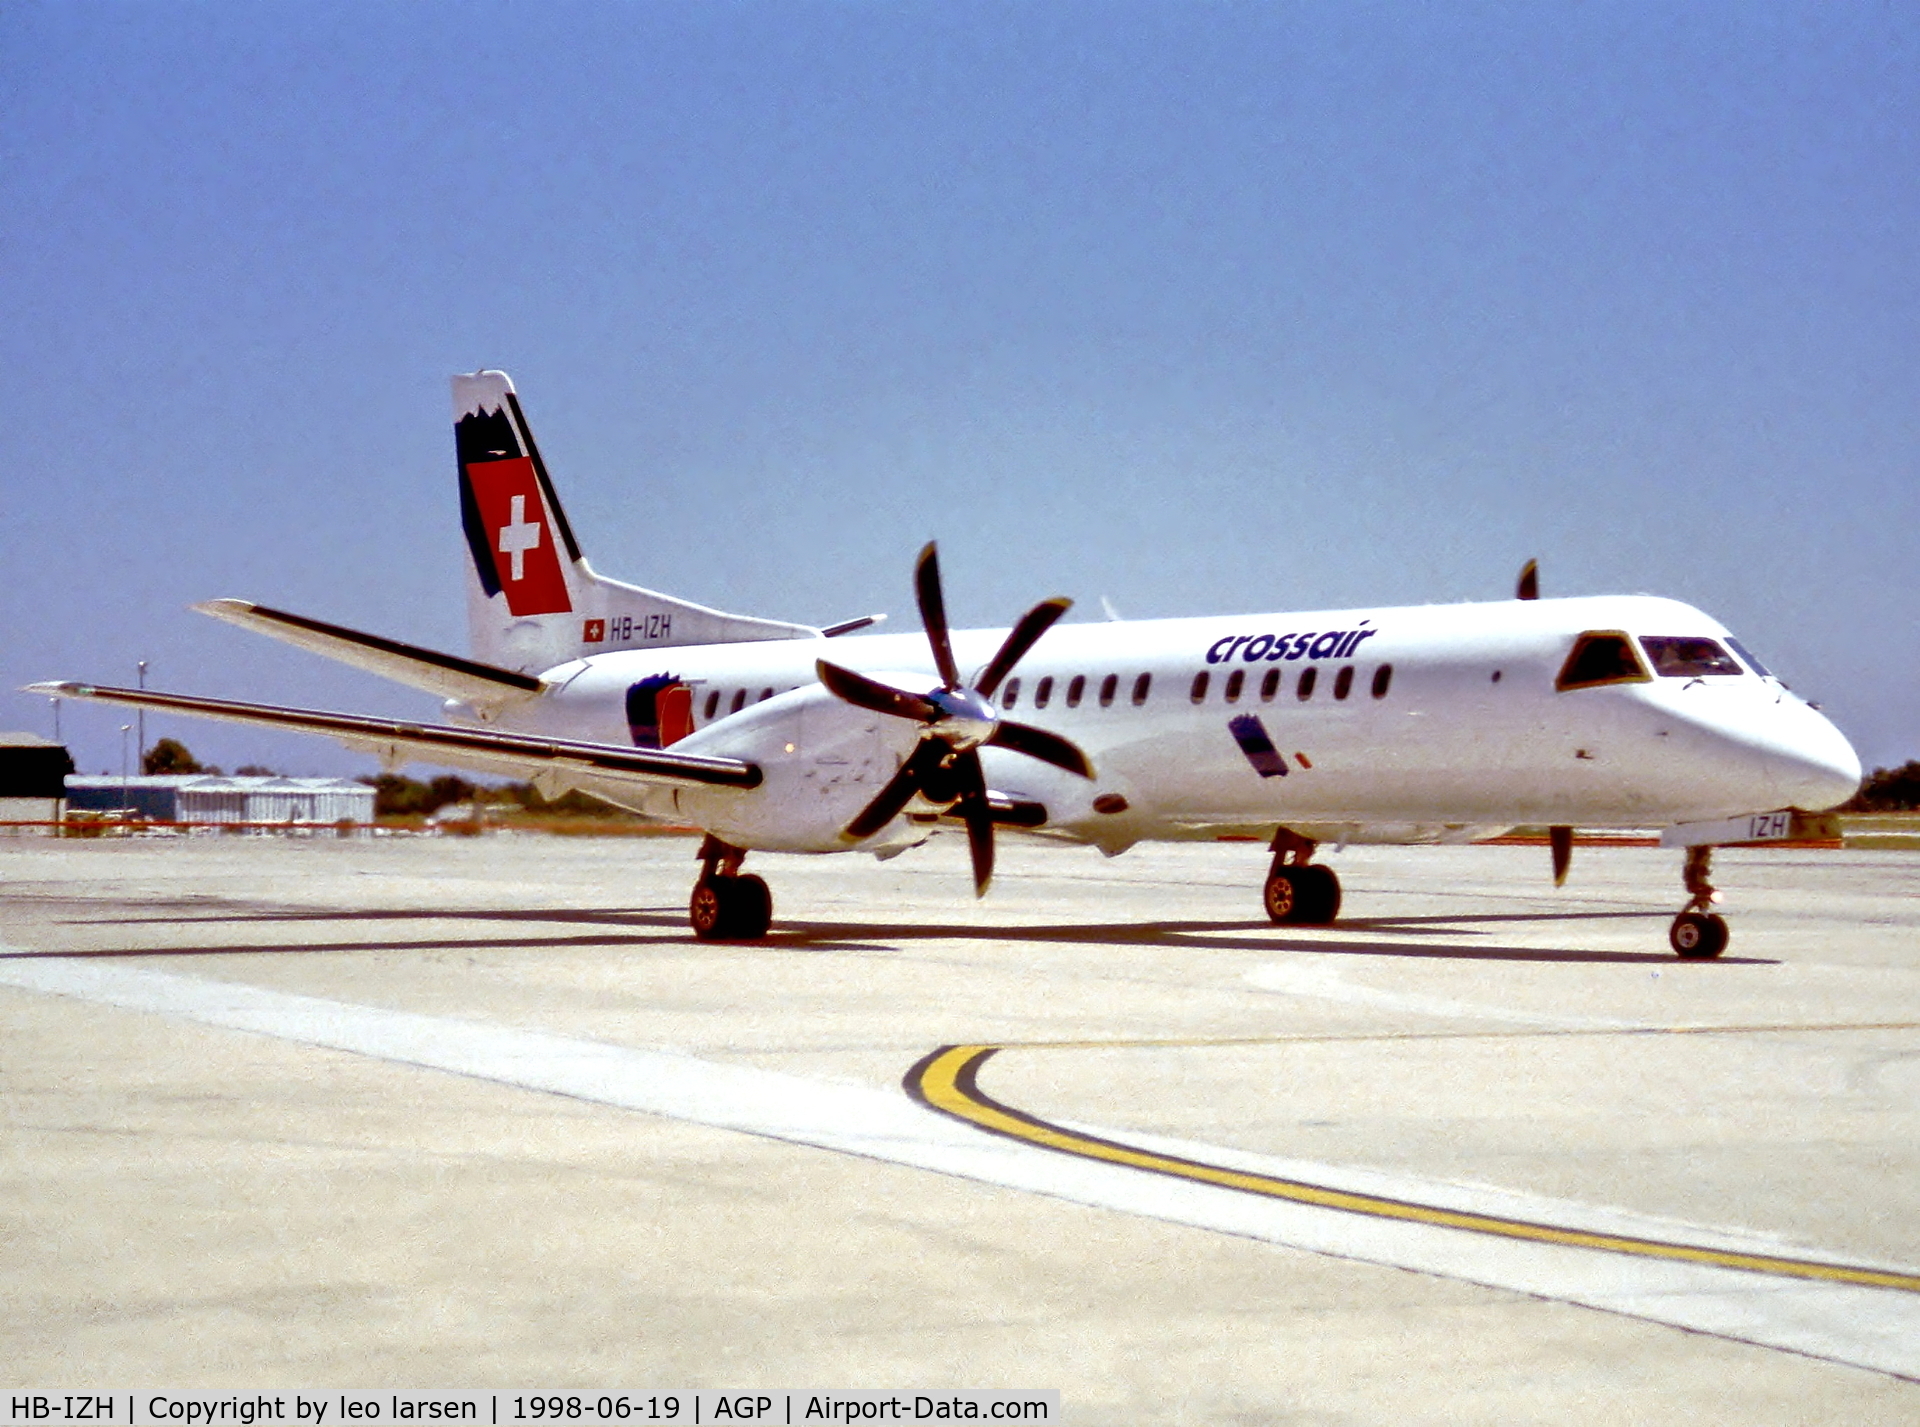 HB-IZH, 1994 Saab 2000 C/N 2000-011, Malaga 19.6.98